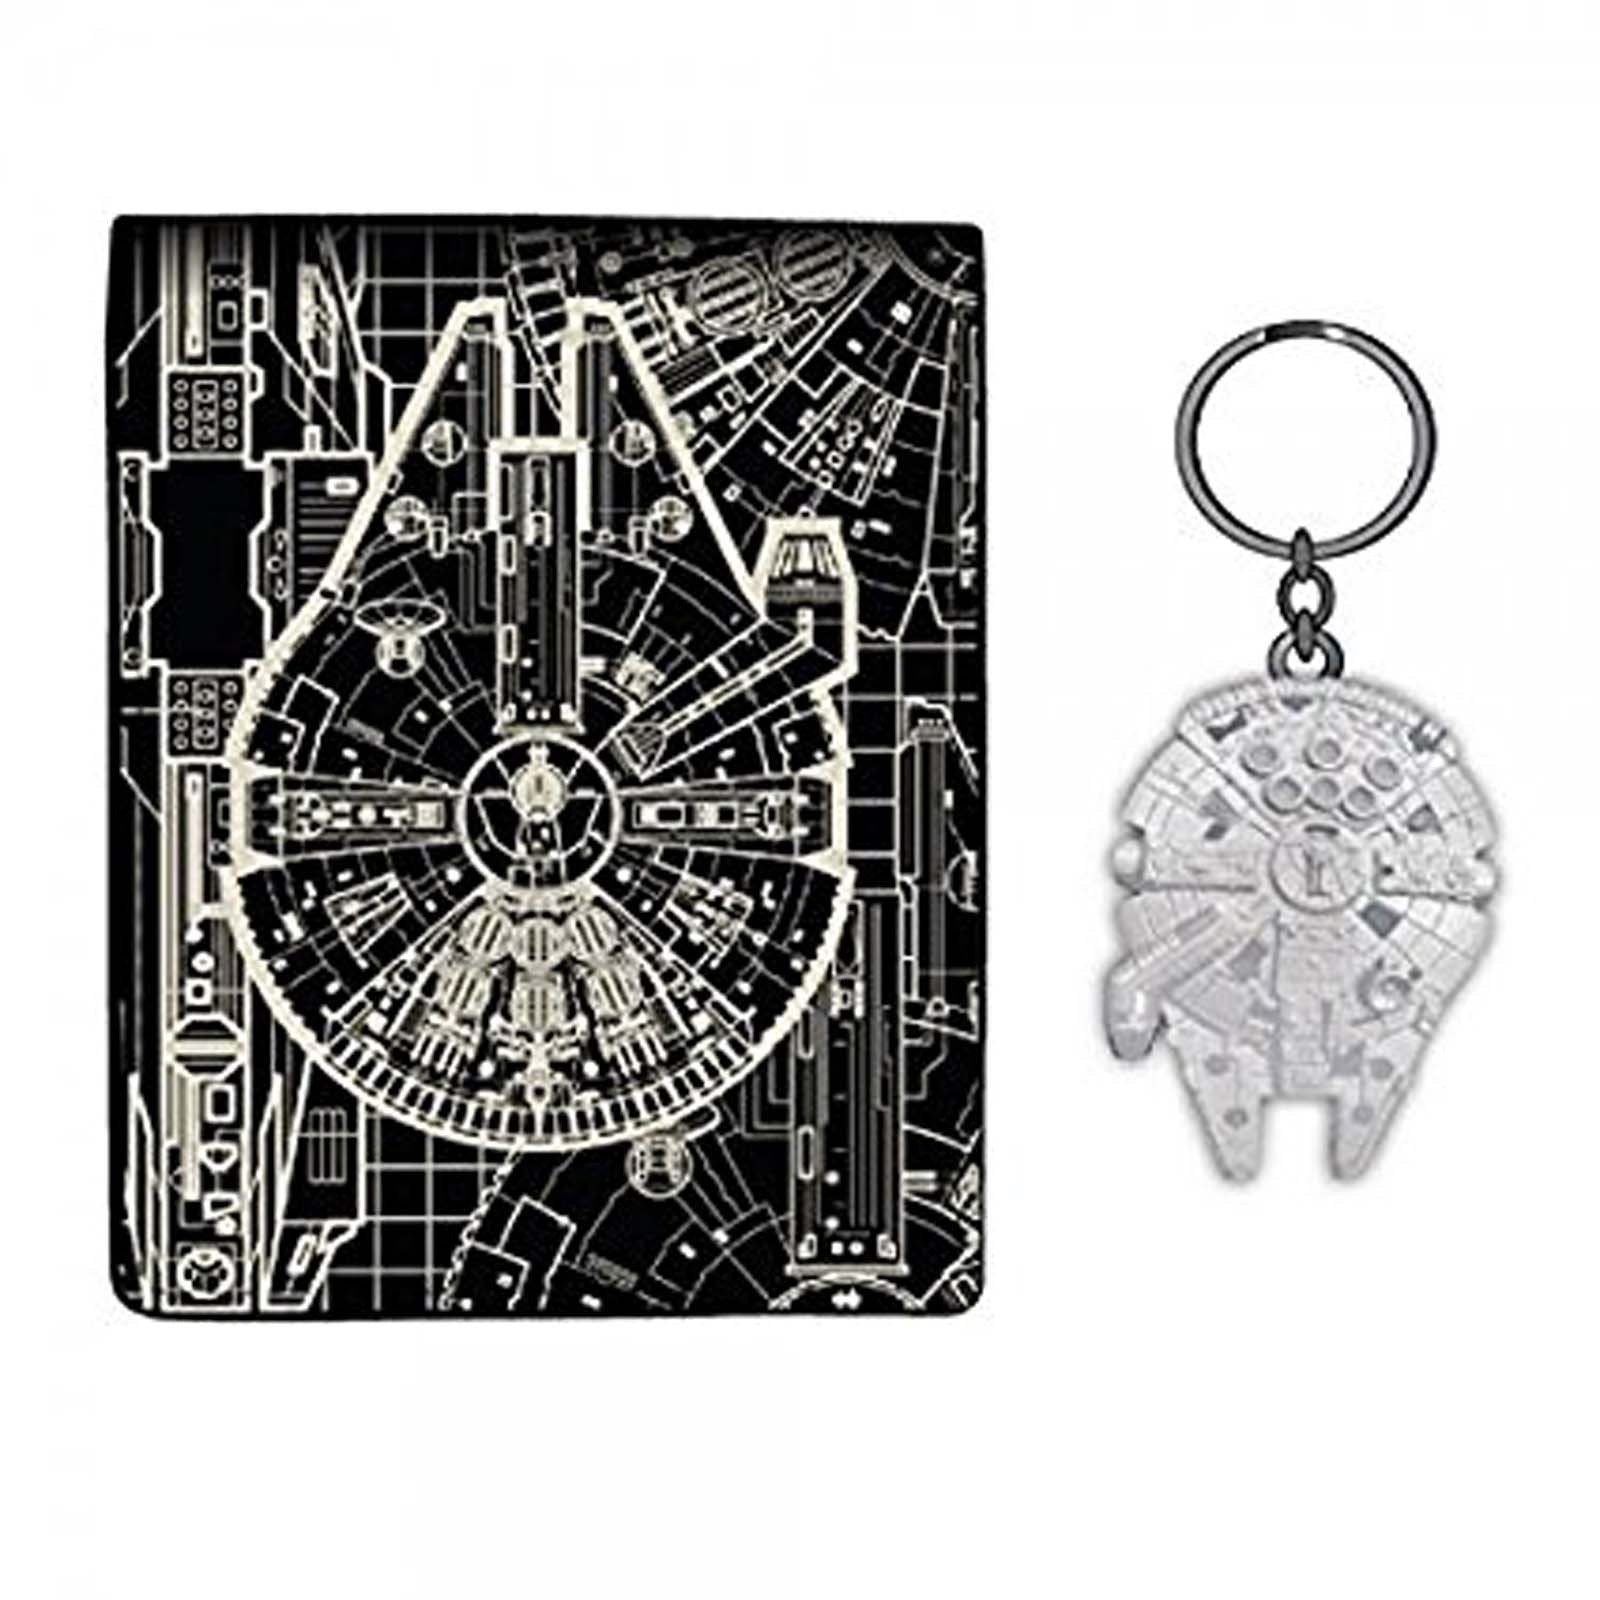 Star Wars Millennium Falcon Wallet and Keychain Box Set